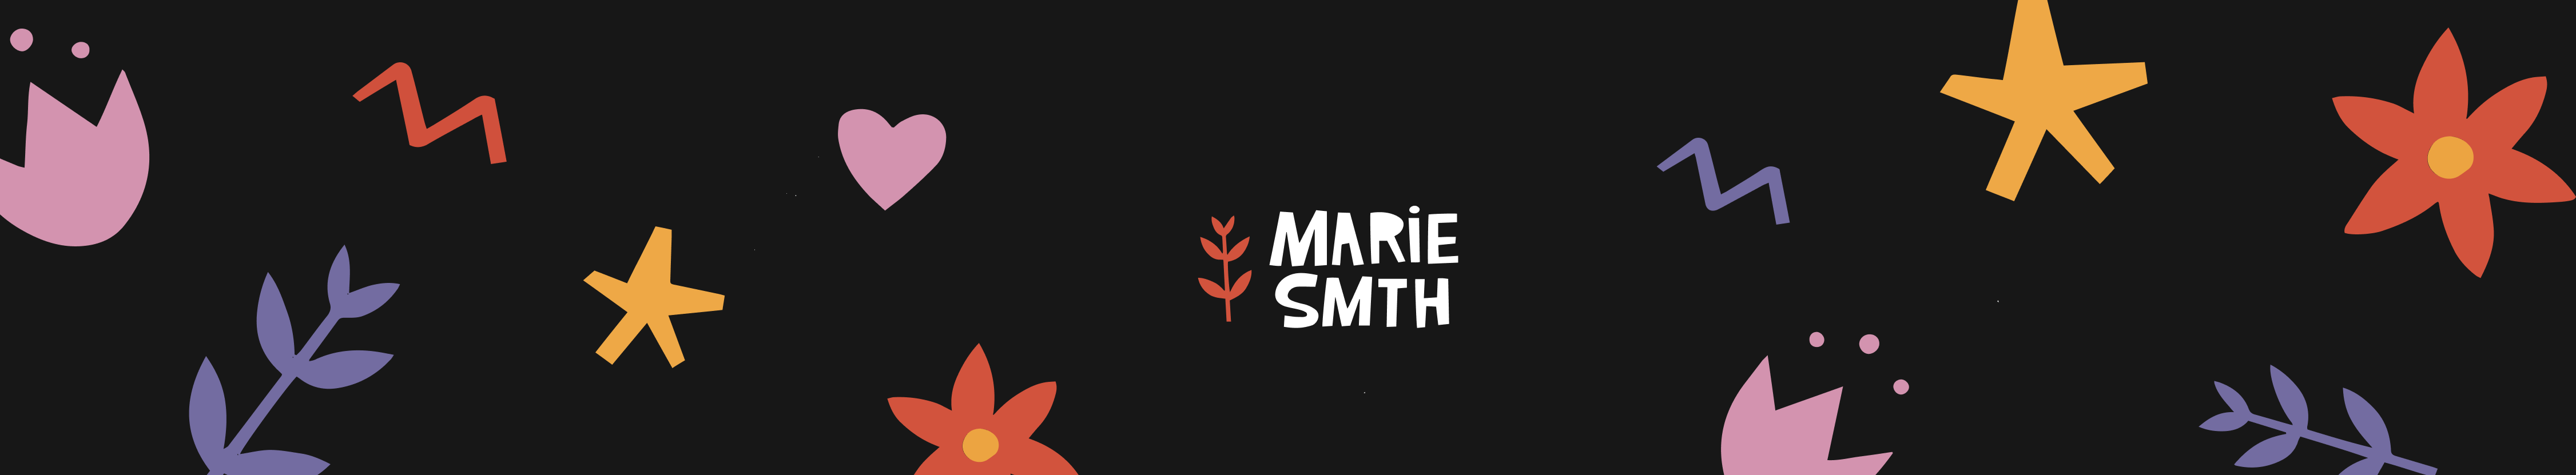 Banner profilu uživatele Marie Smth